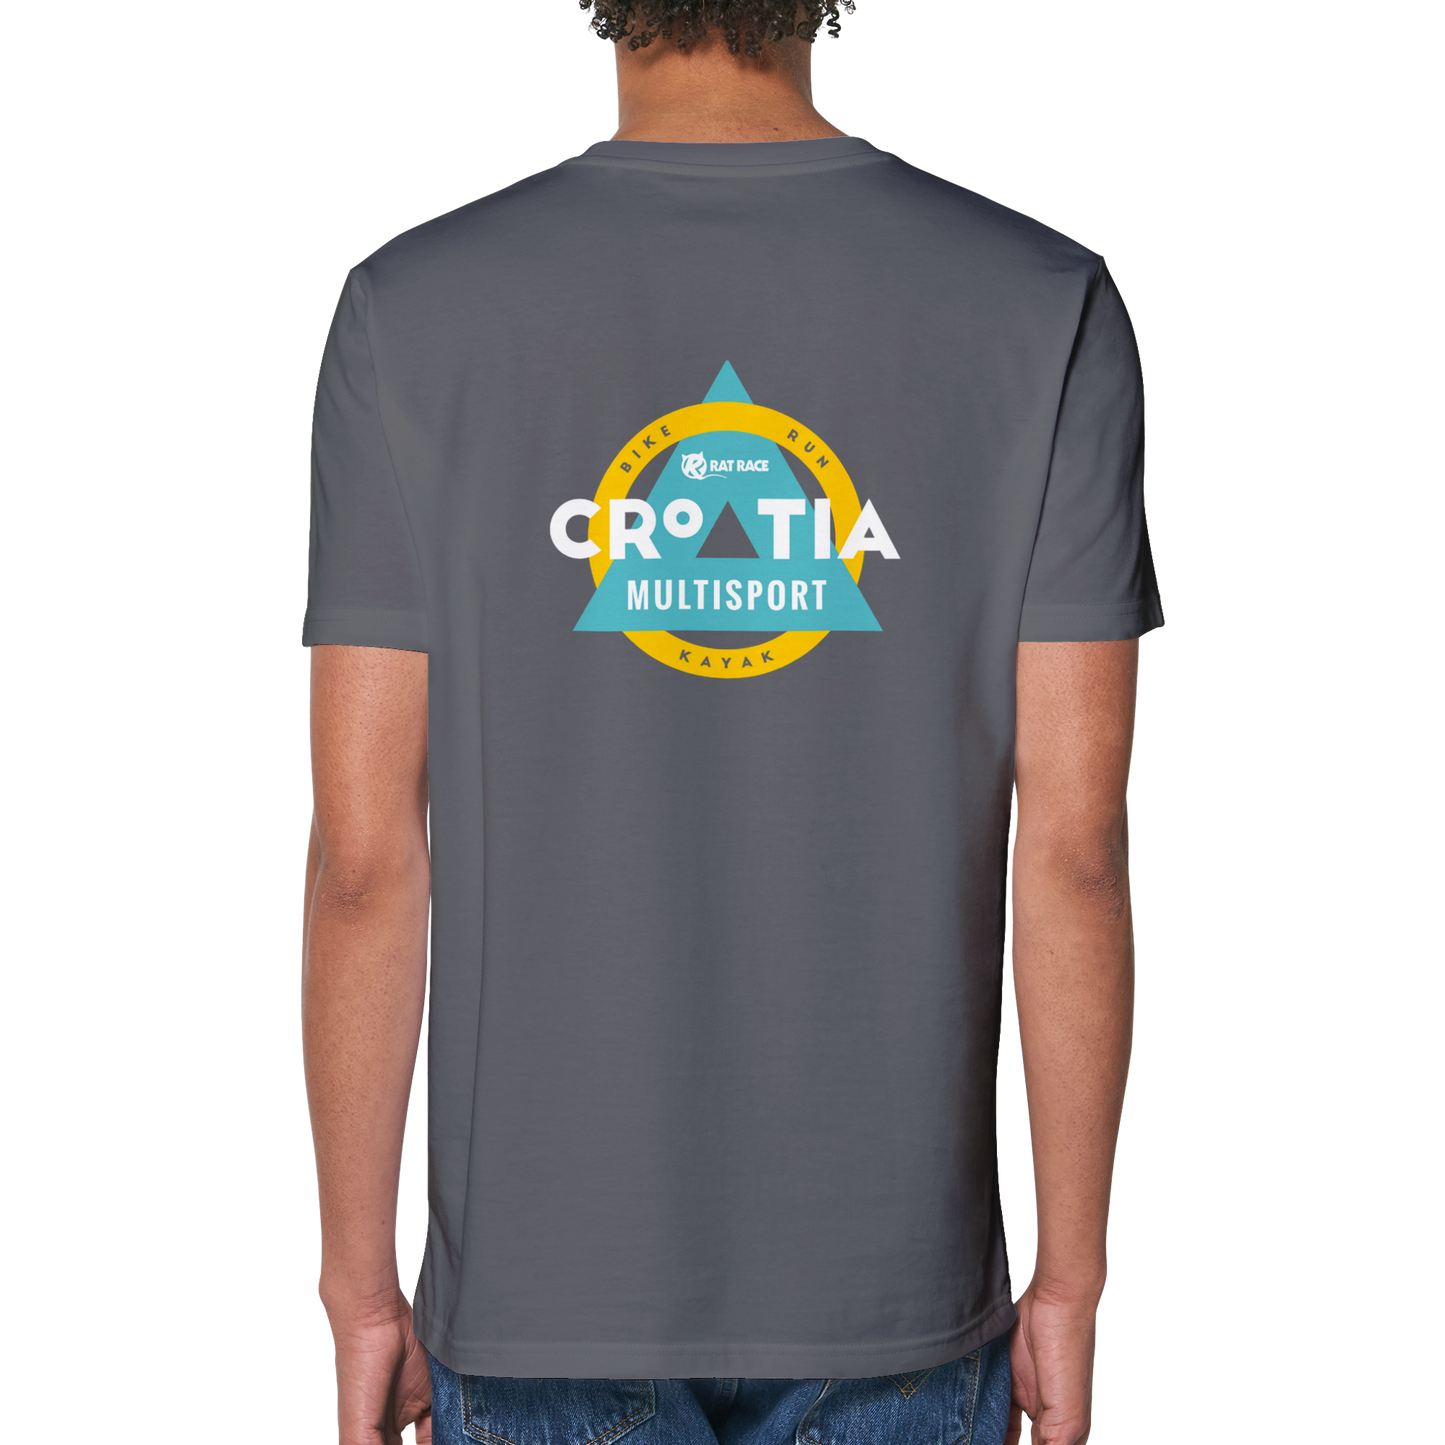 Rat Race Croatia Multisport Organic Unisex Crewneck T-shirt - Grey